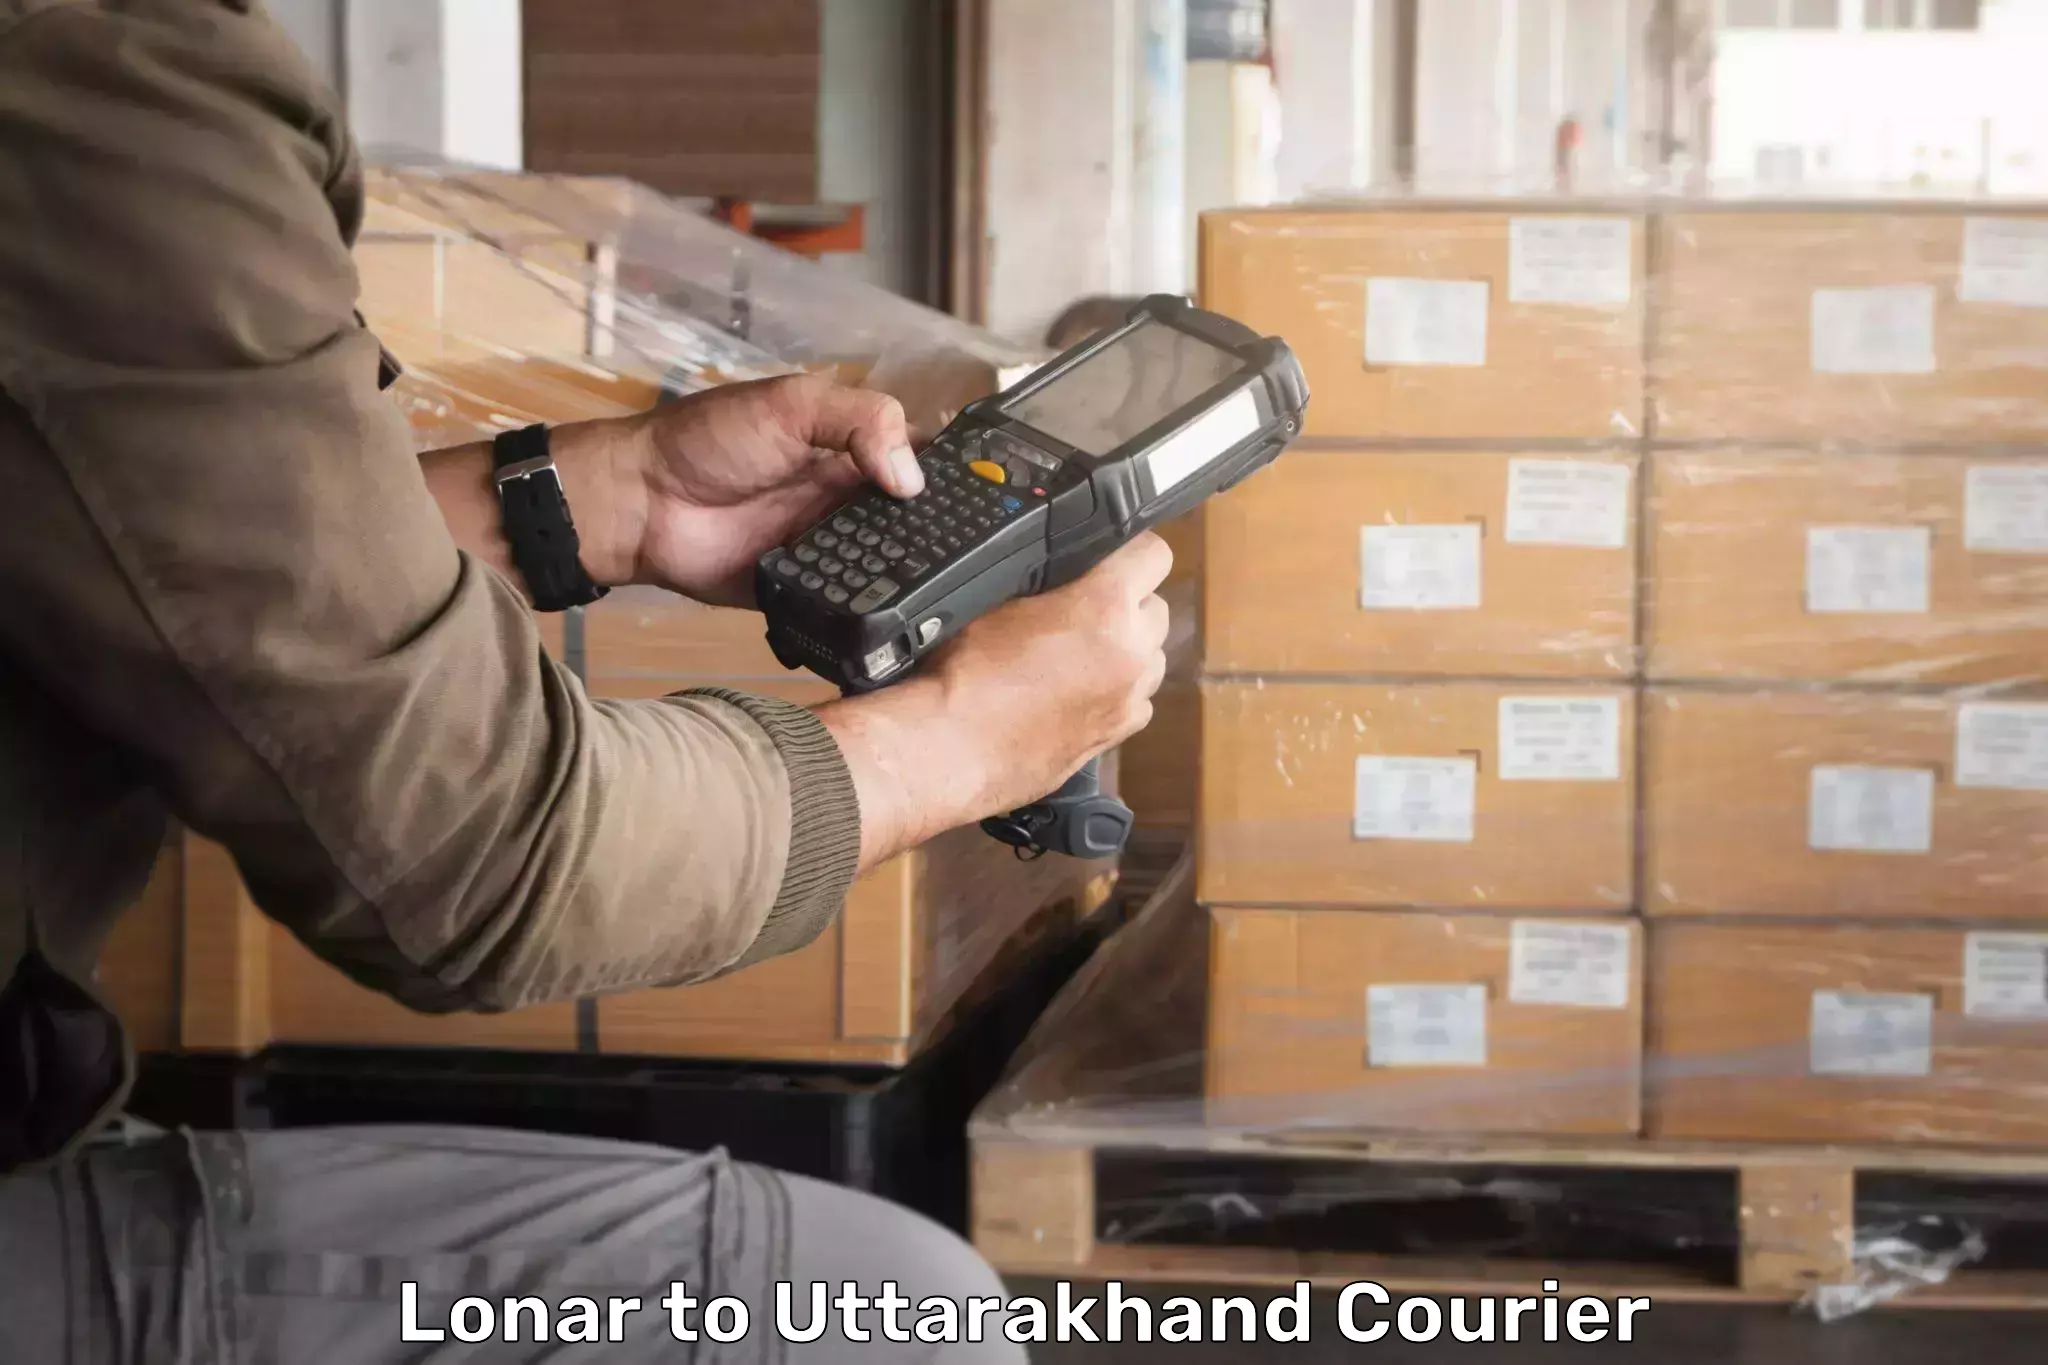 Courier service partnerships Lonar to Uttarakhand